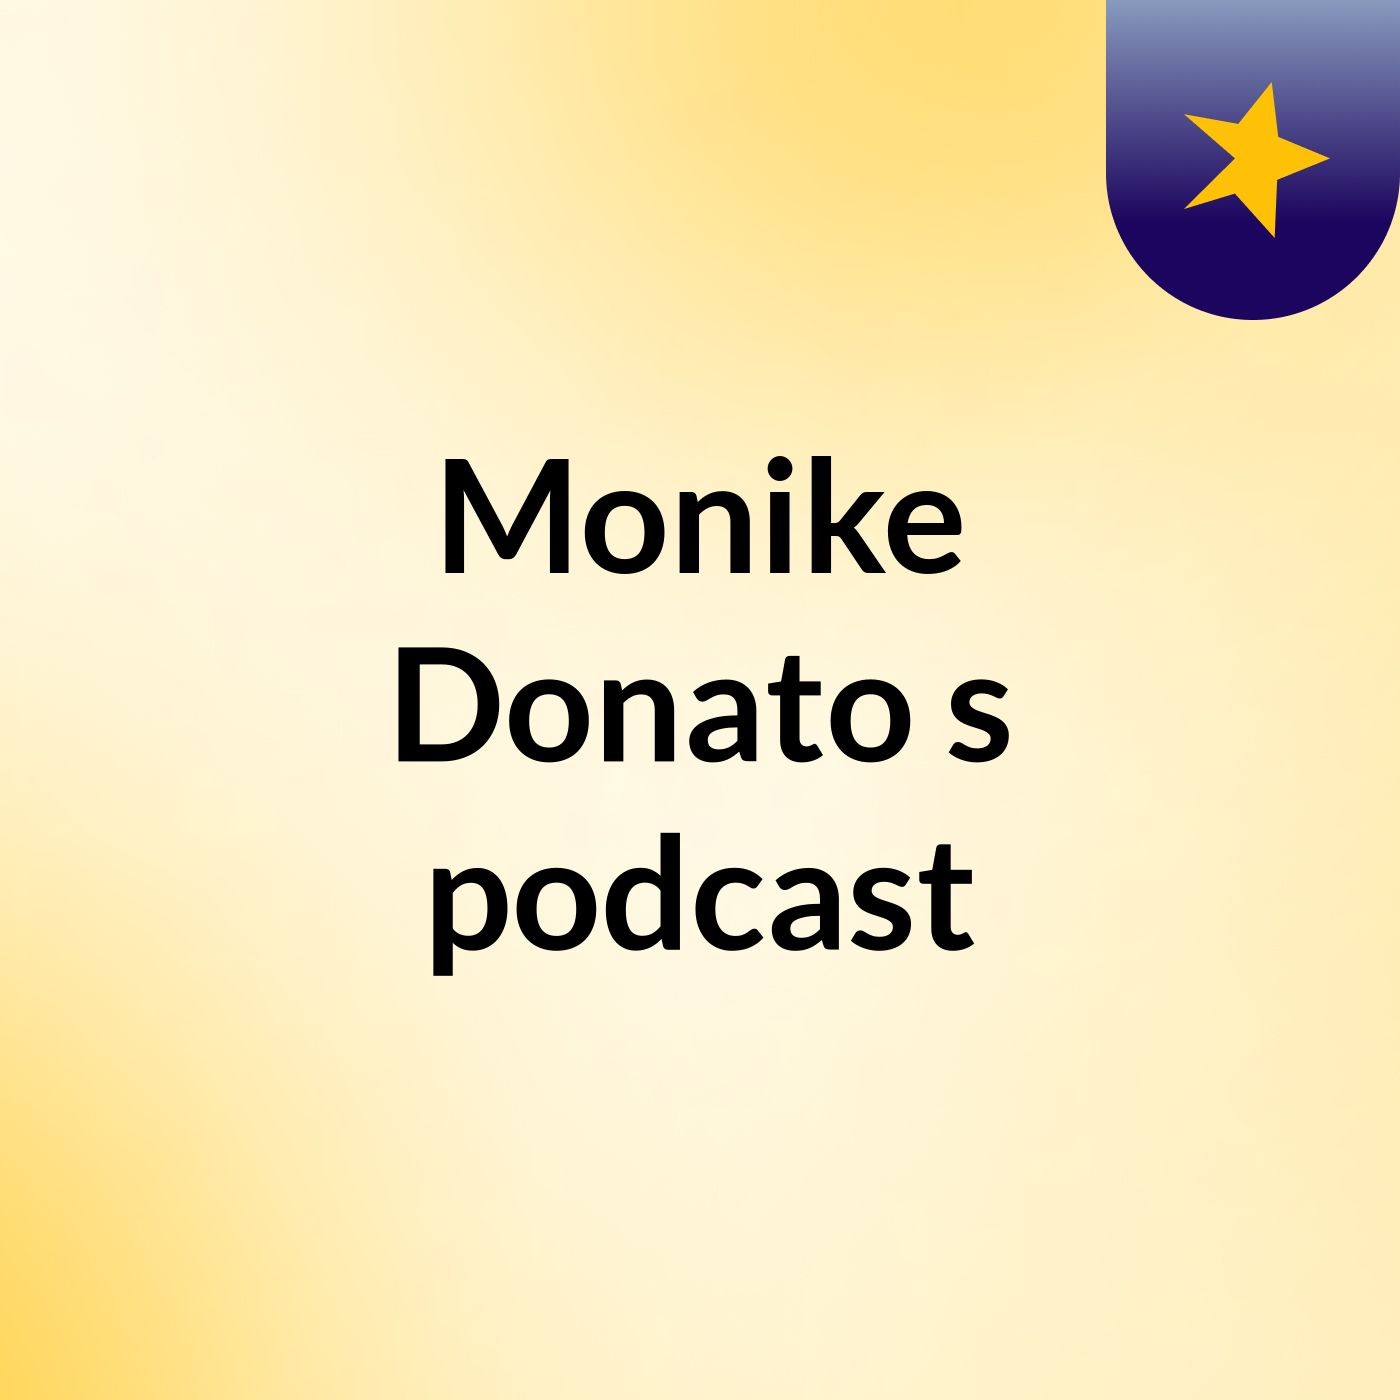 Monike Donato's podcast